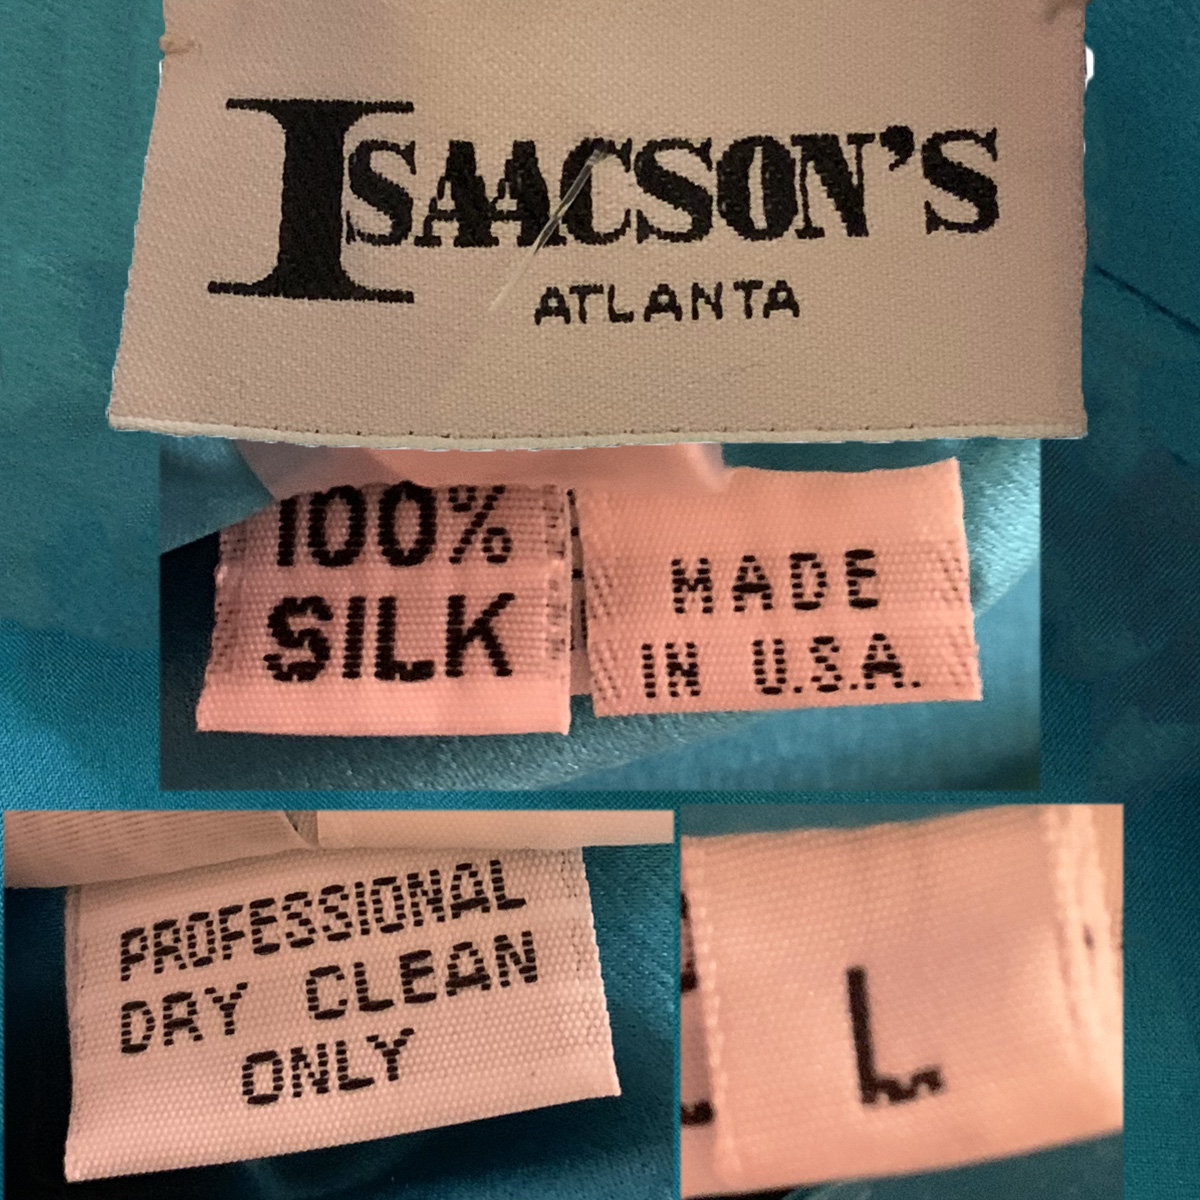 Isaccson's Atlanta label